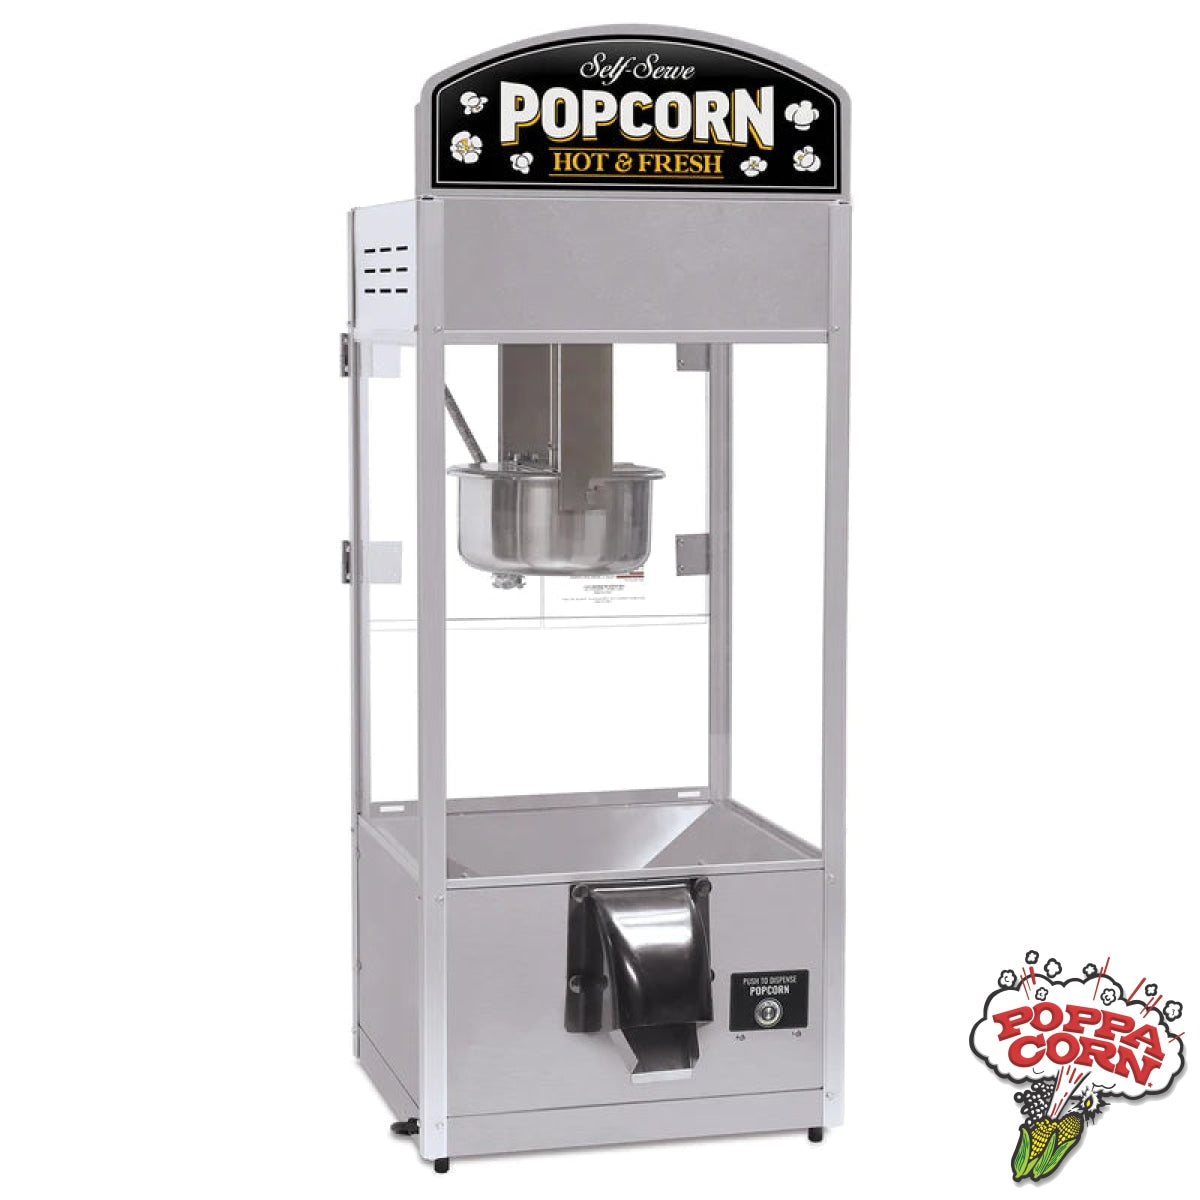 ReadyPop® Jr. Back Counter Model Popcorn Machine - GM2783-00-010 - Poppa Corn Corp